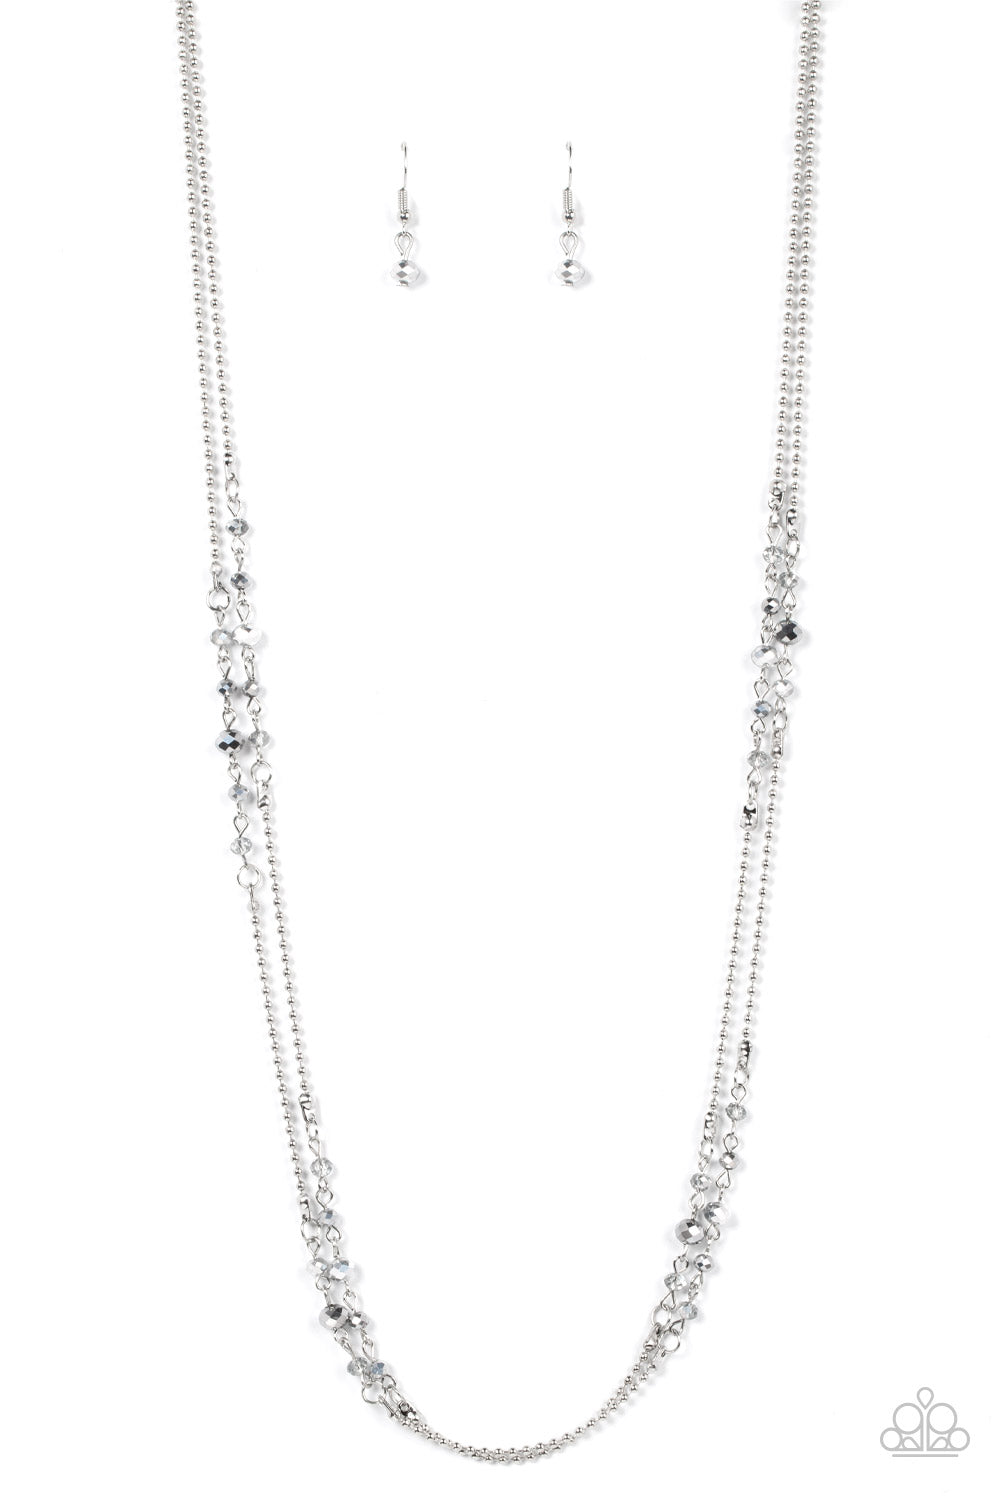 Petitely Prismatic - Silver - Paparazzi necklace